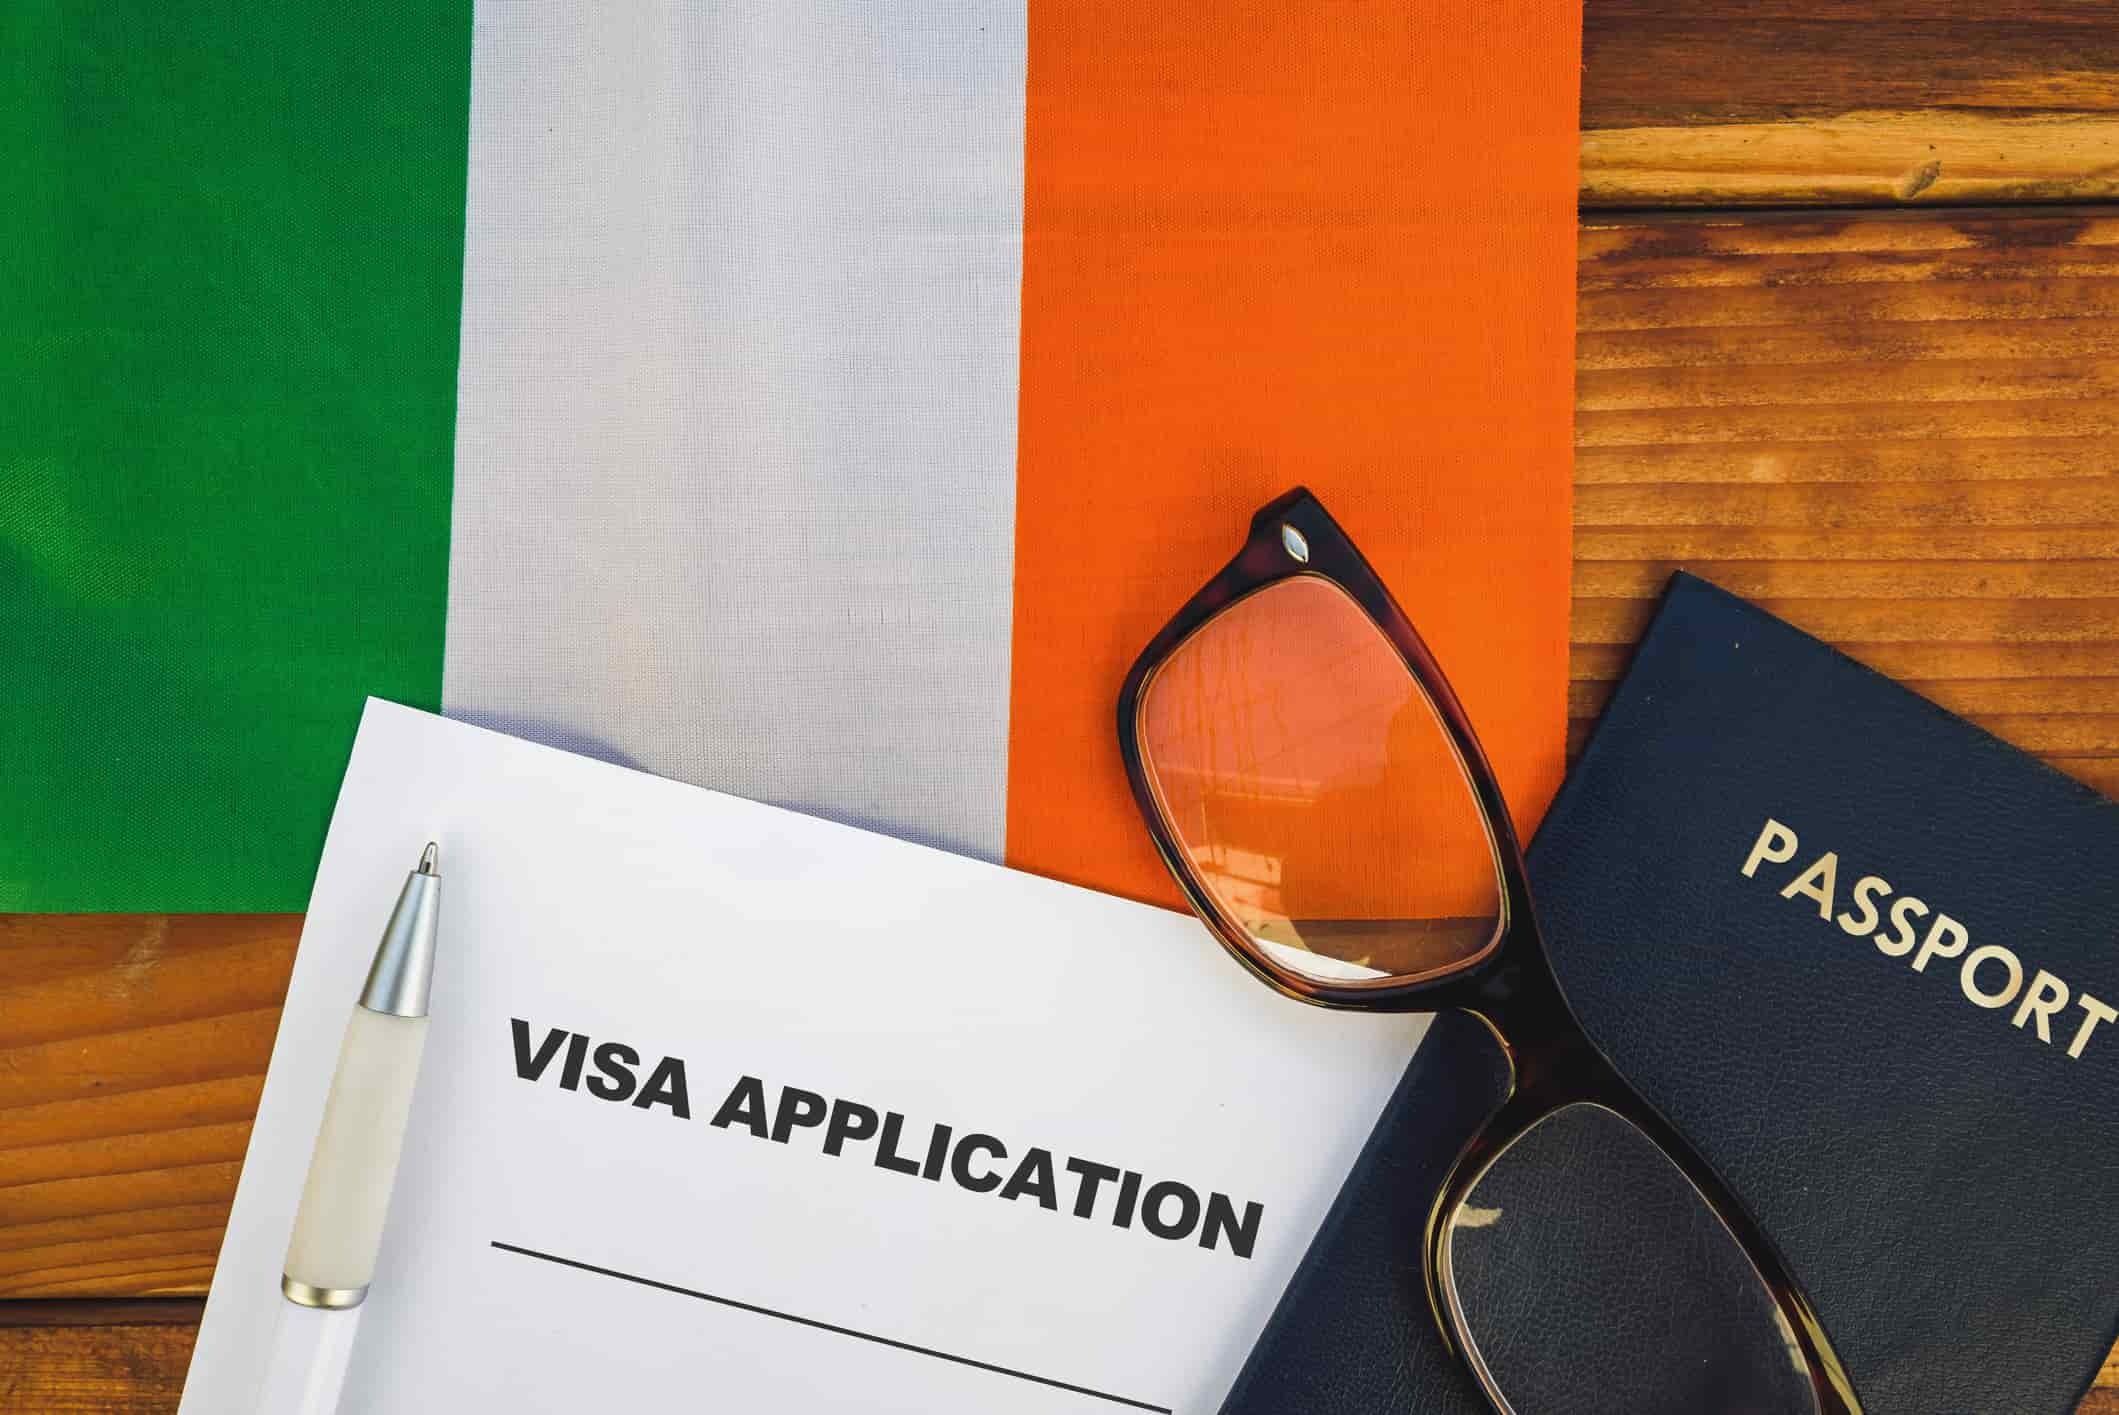 Irish flag and visa application form on a table